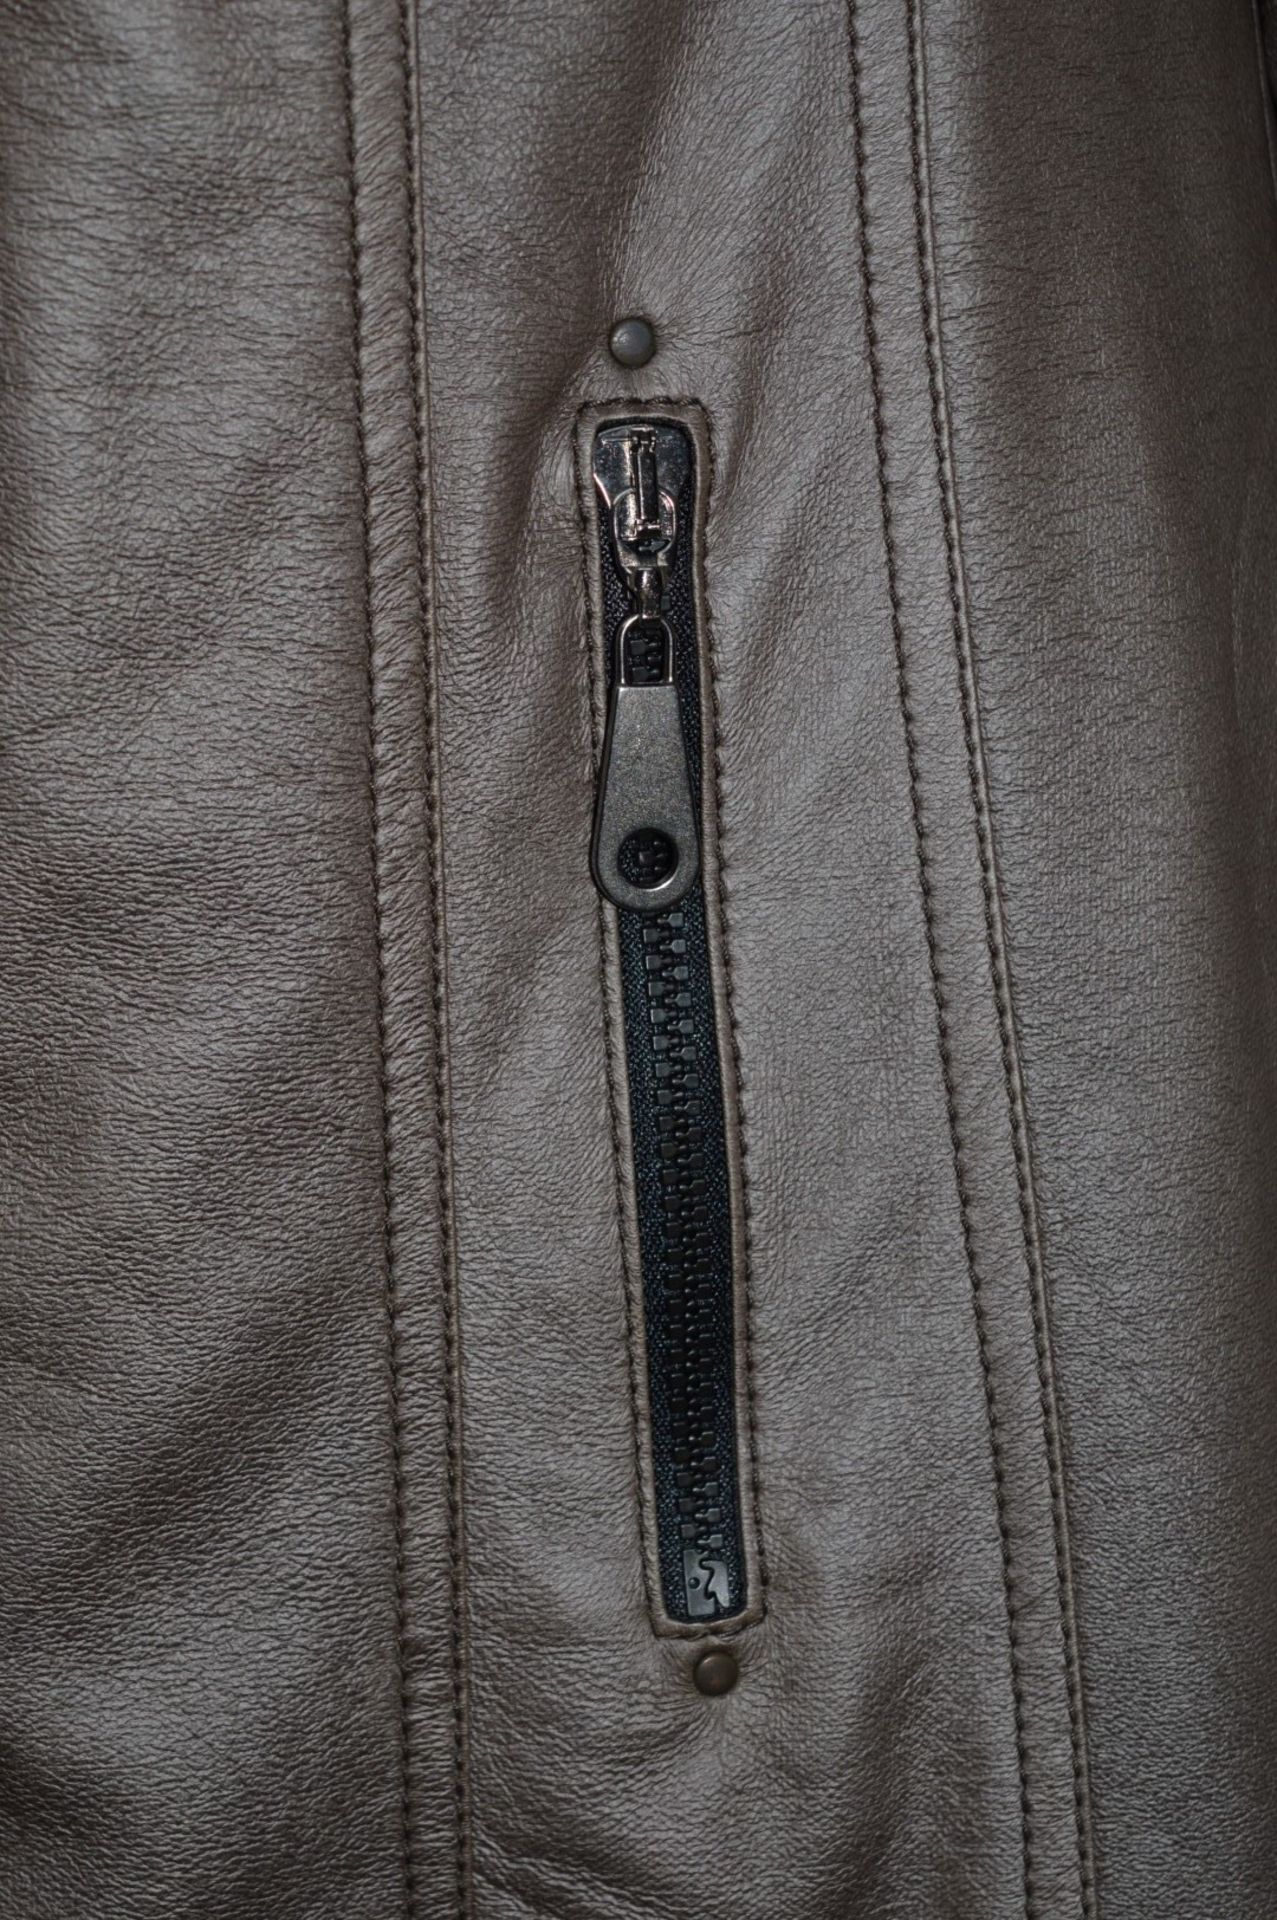 1 x Steilmann KSTN By Kirsten Womens Faux Leather Coat - Functional Pockets - Zip Fastener - UK Size - Image 3 of 11